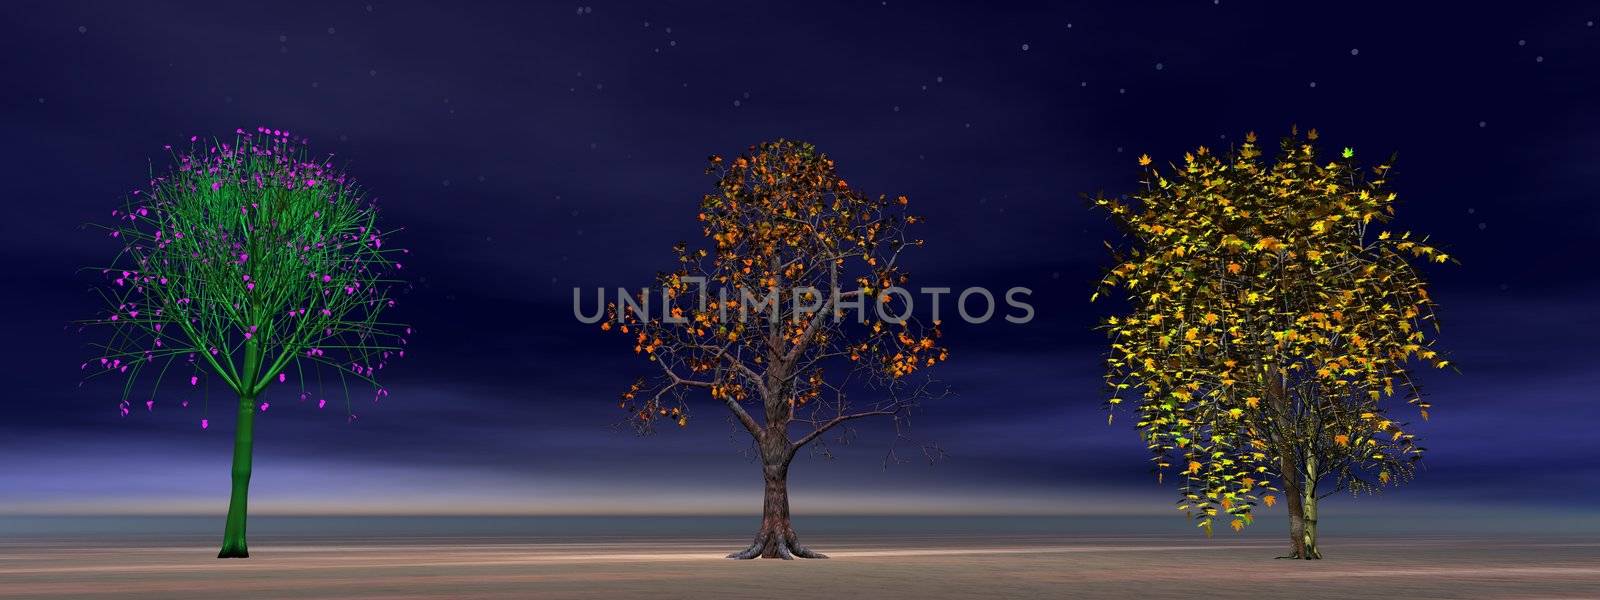 landscape treesc3 by mariephotos